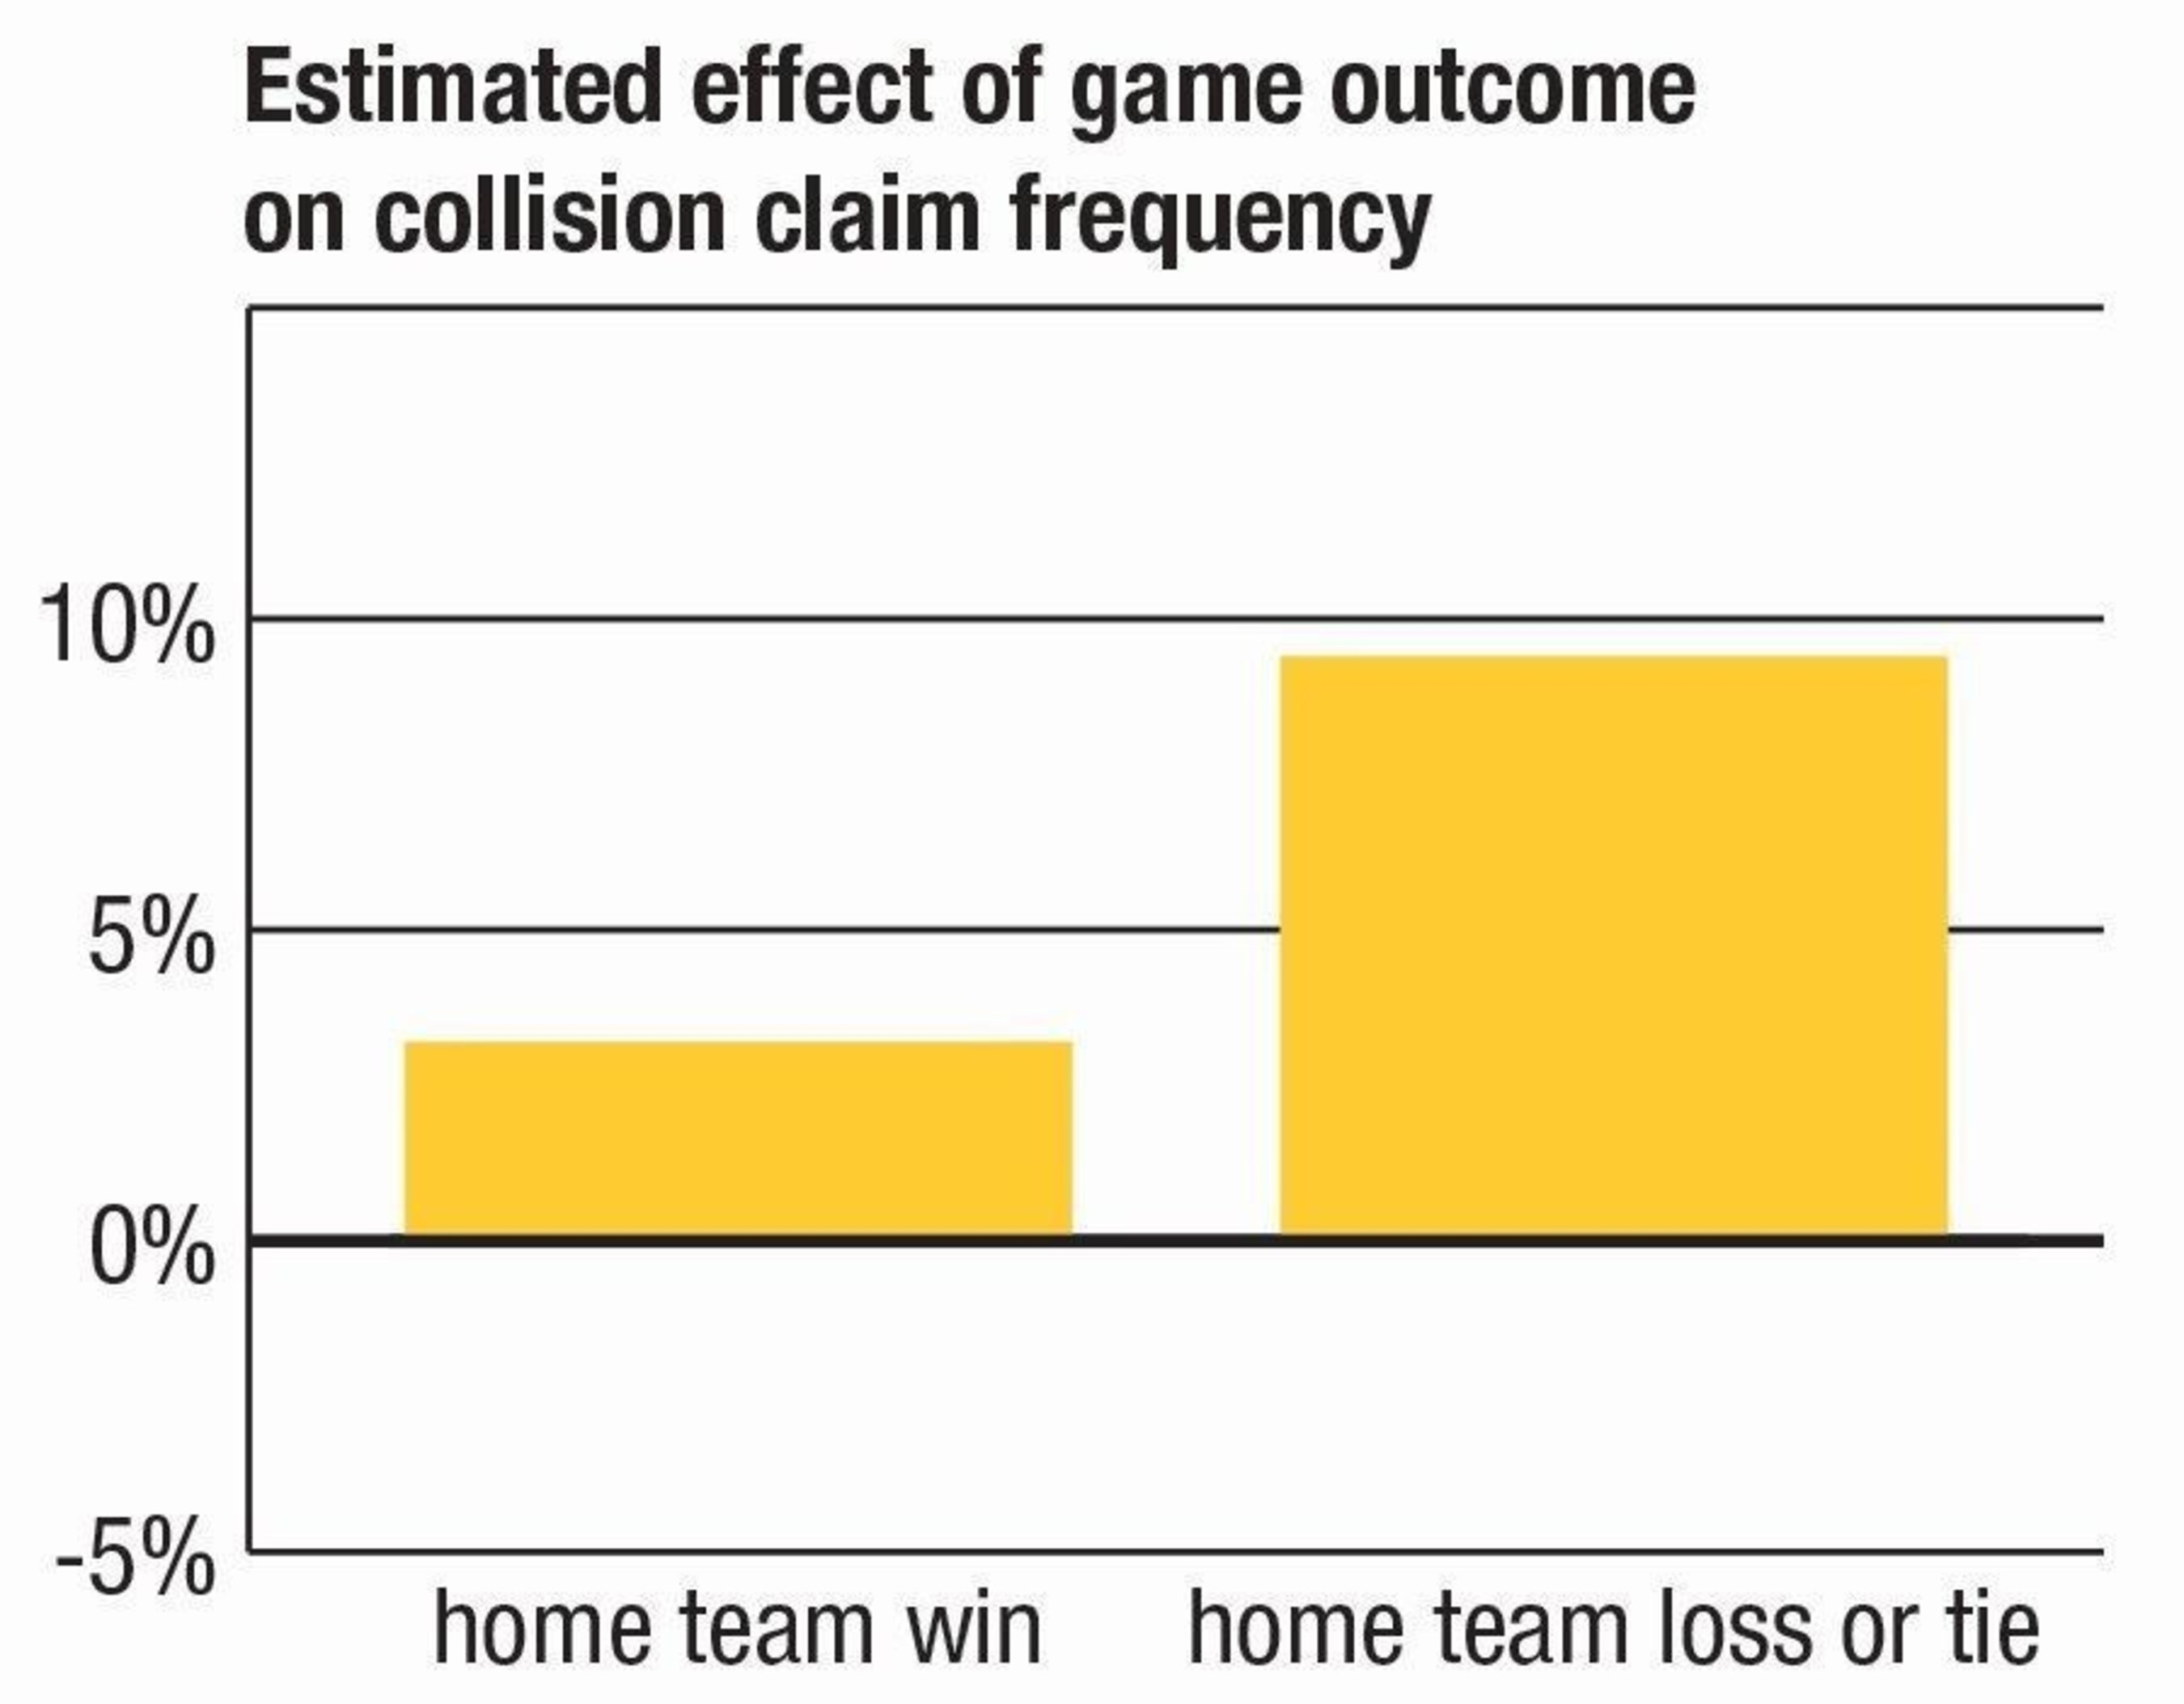 NFL home game outcome and car crash risk